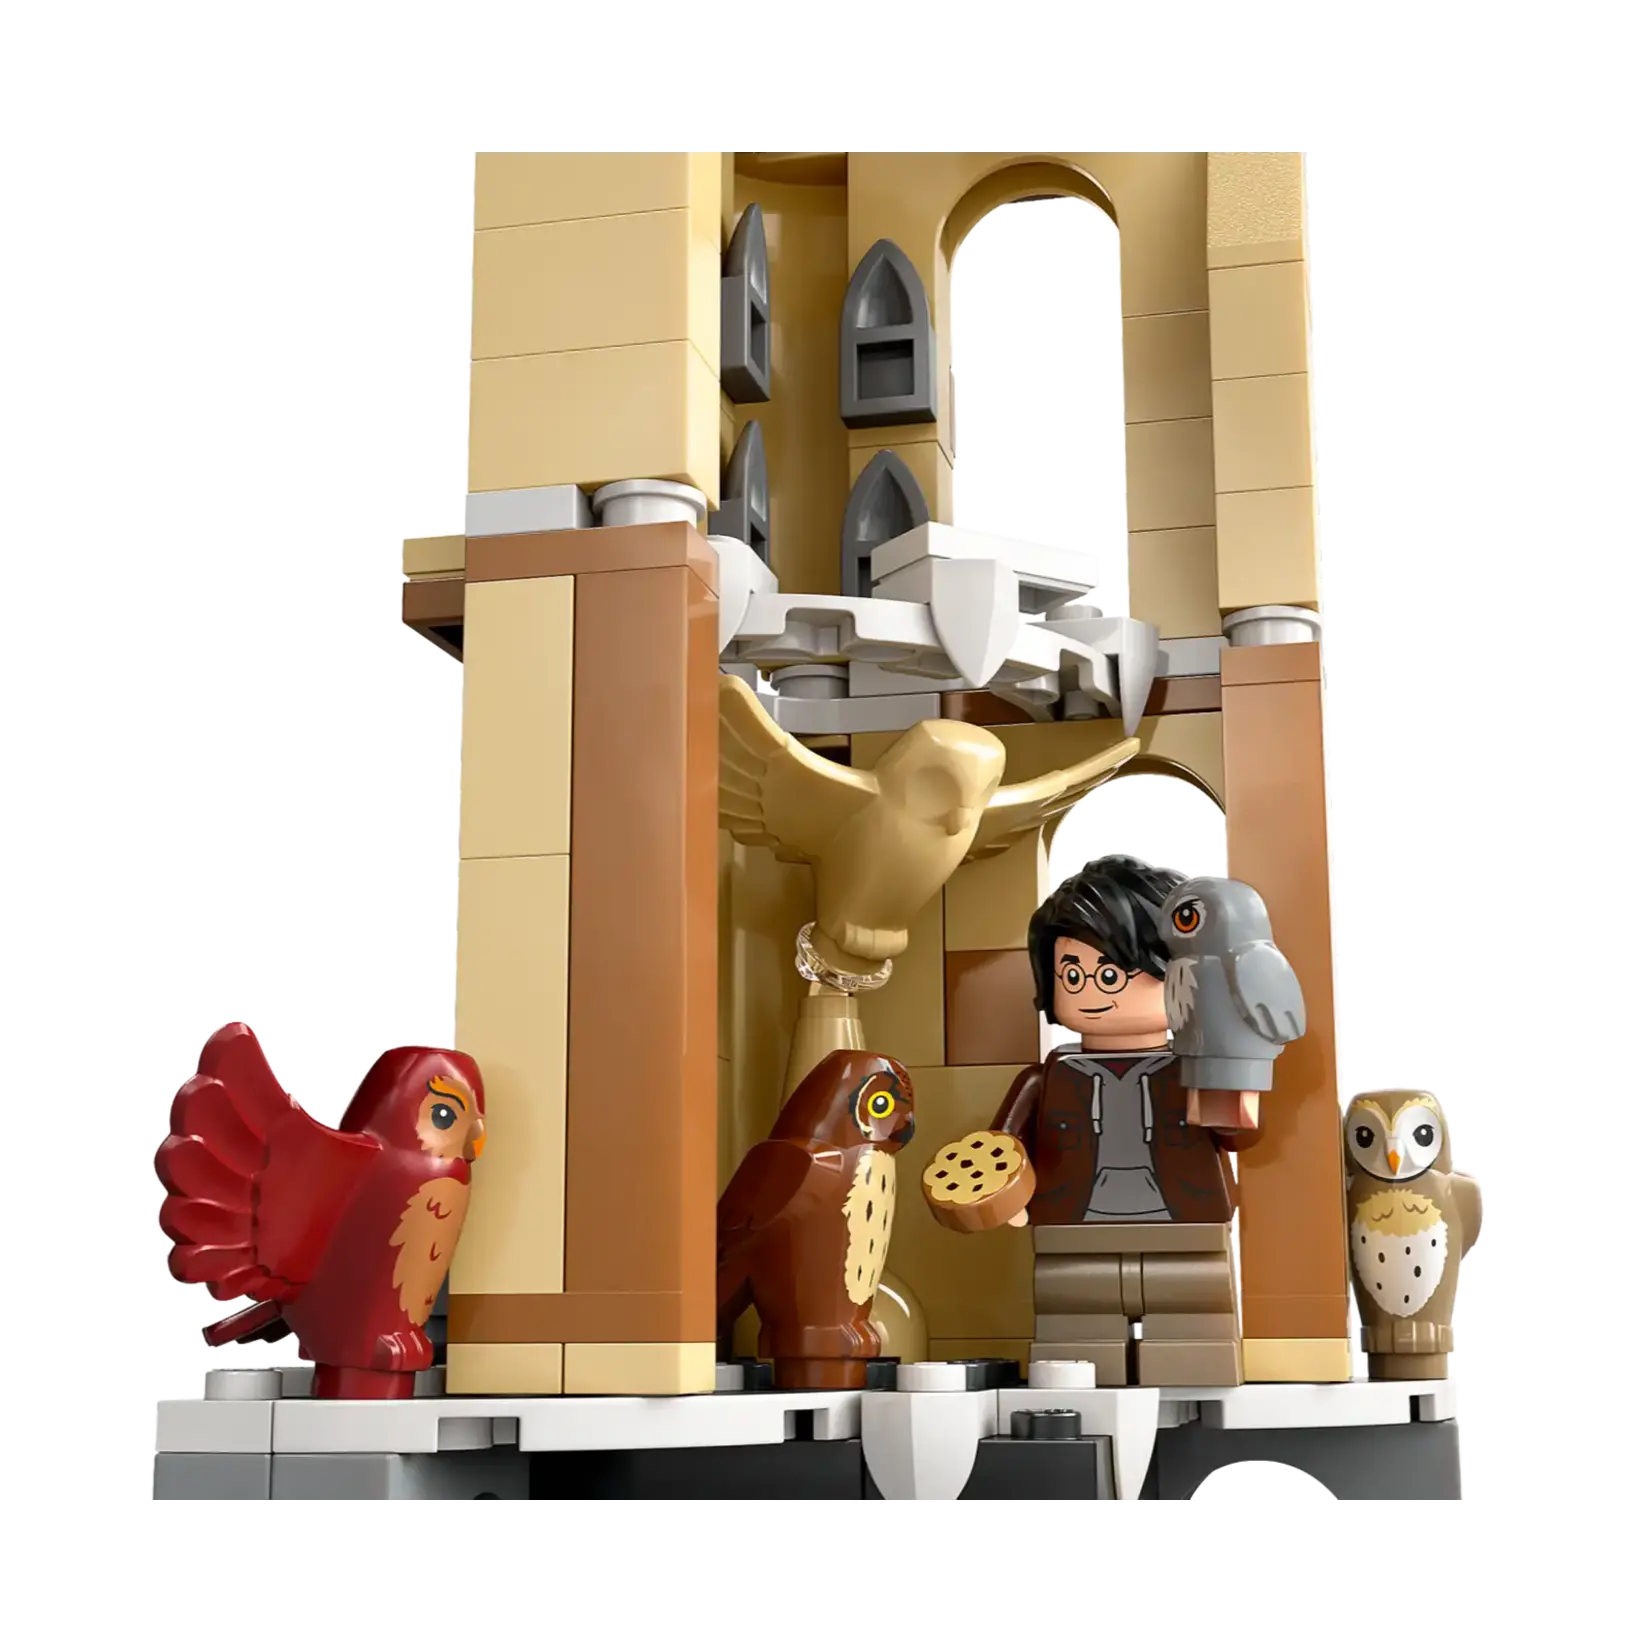 LEGO LEGO Harry Potter Kasteel Zweinstein Uilenvleugel (76430)